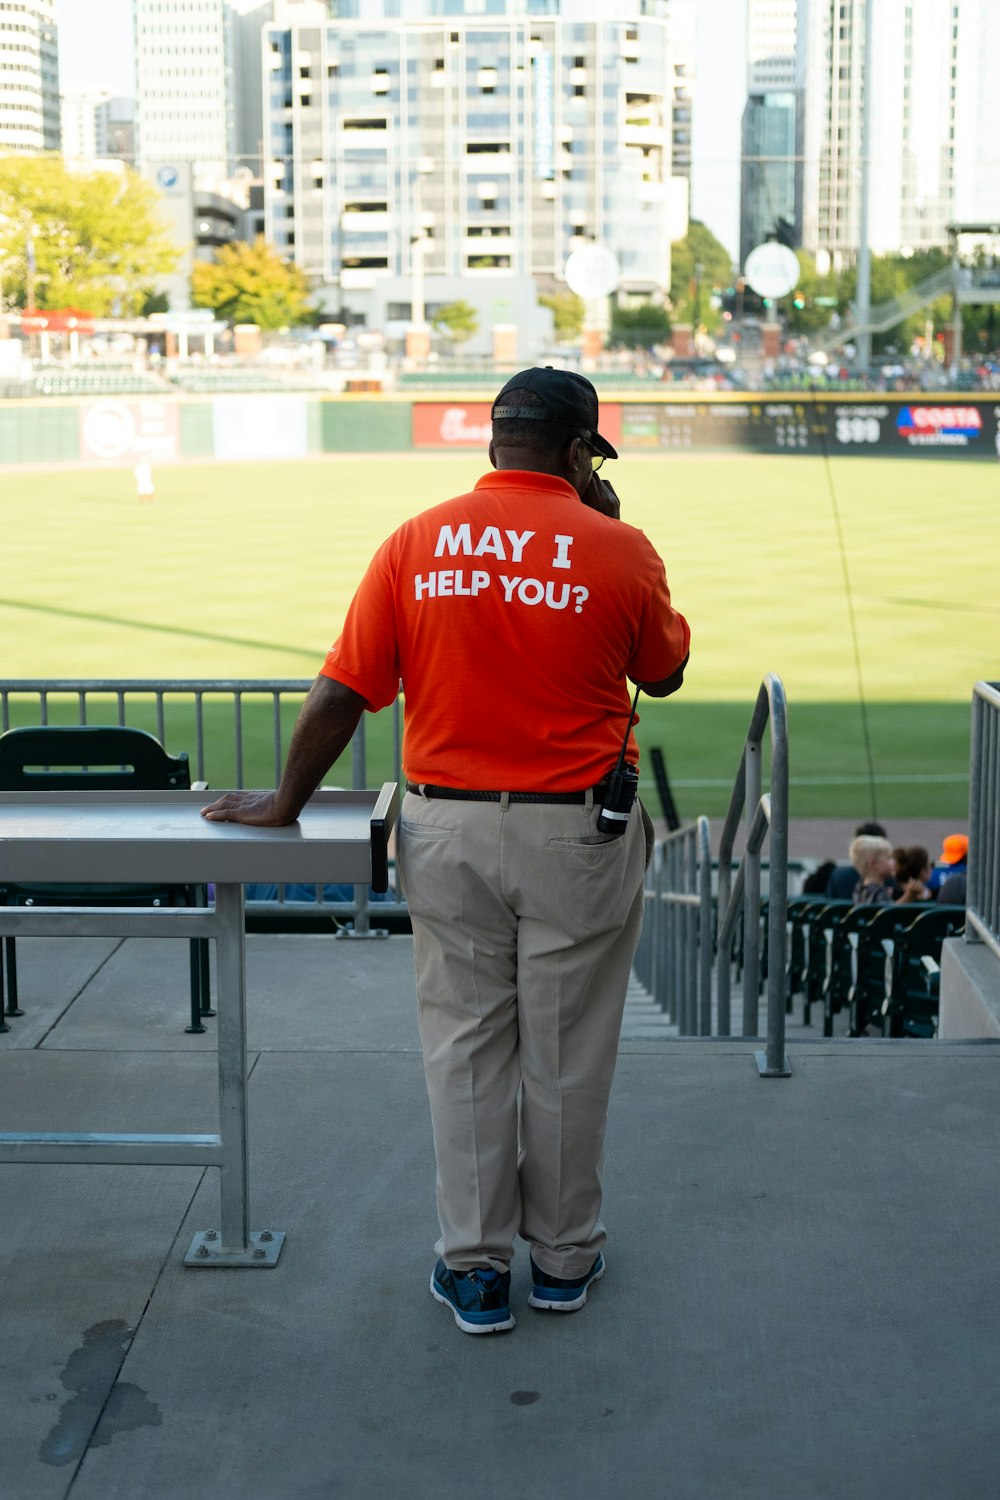 a man in an orange shirt stands at a baseball field